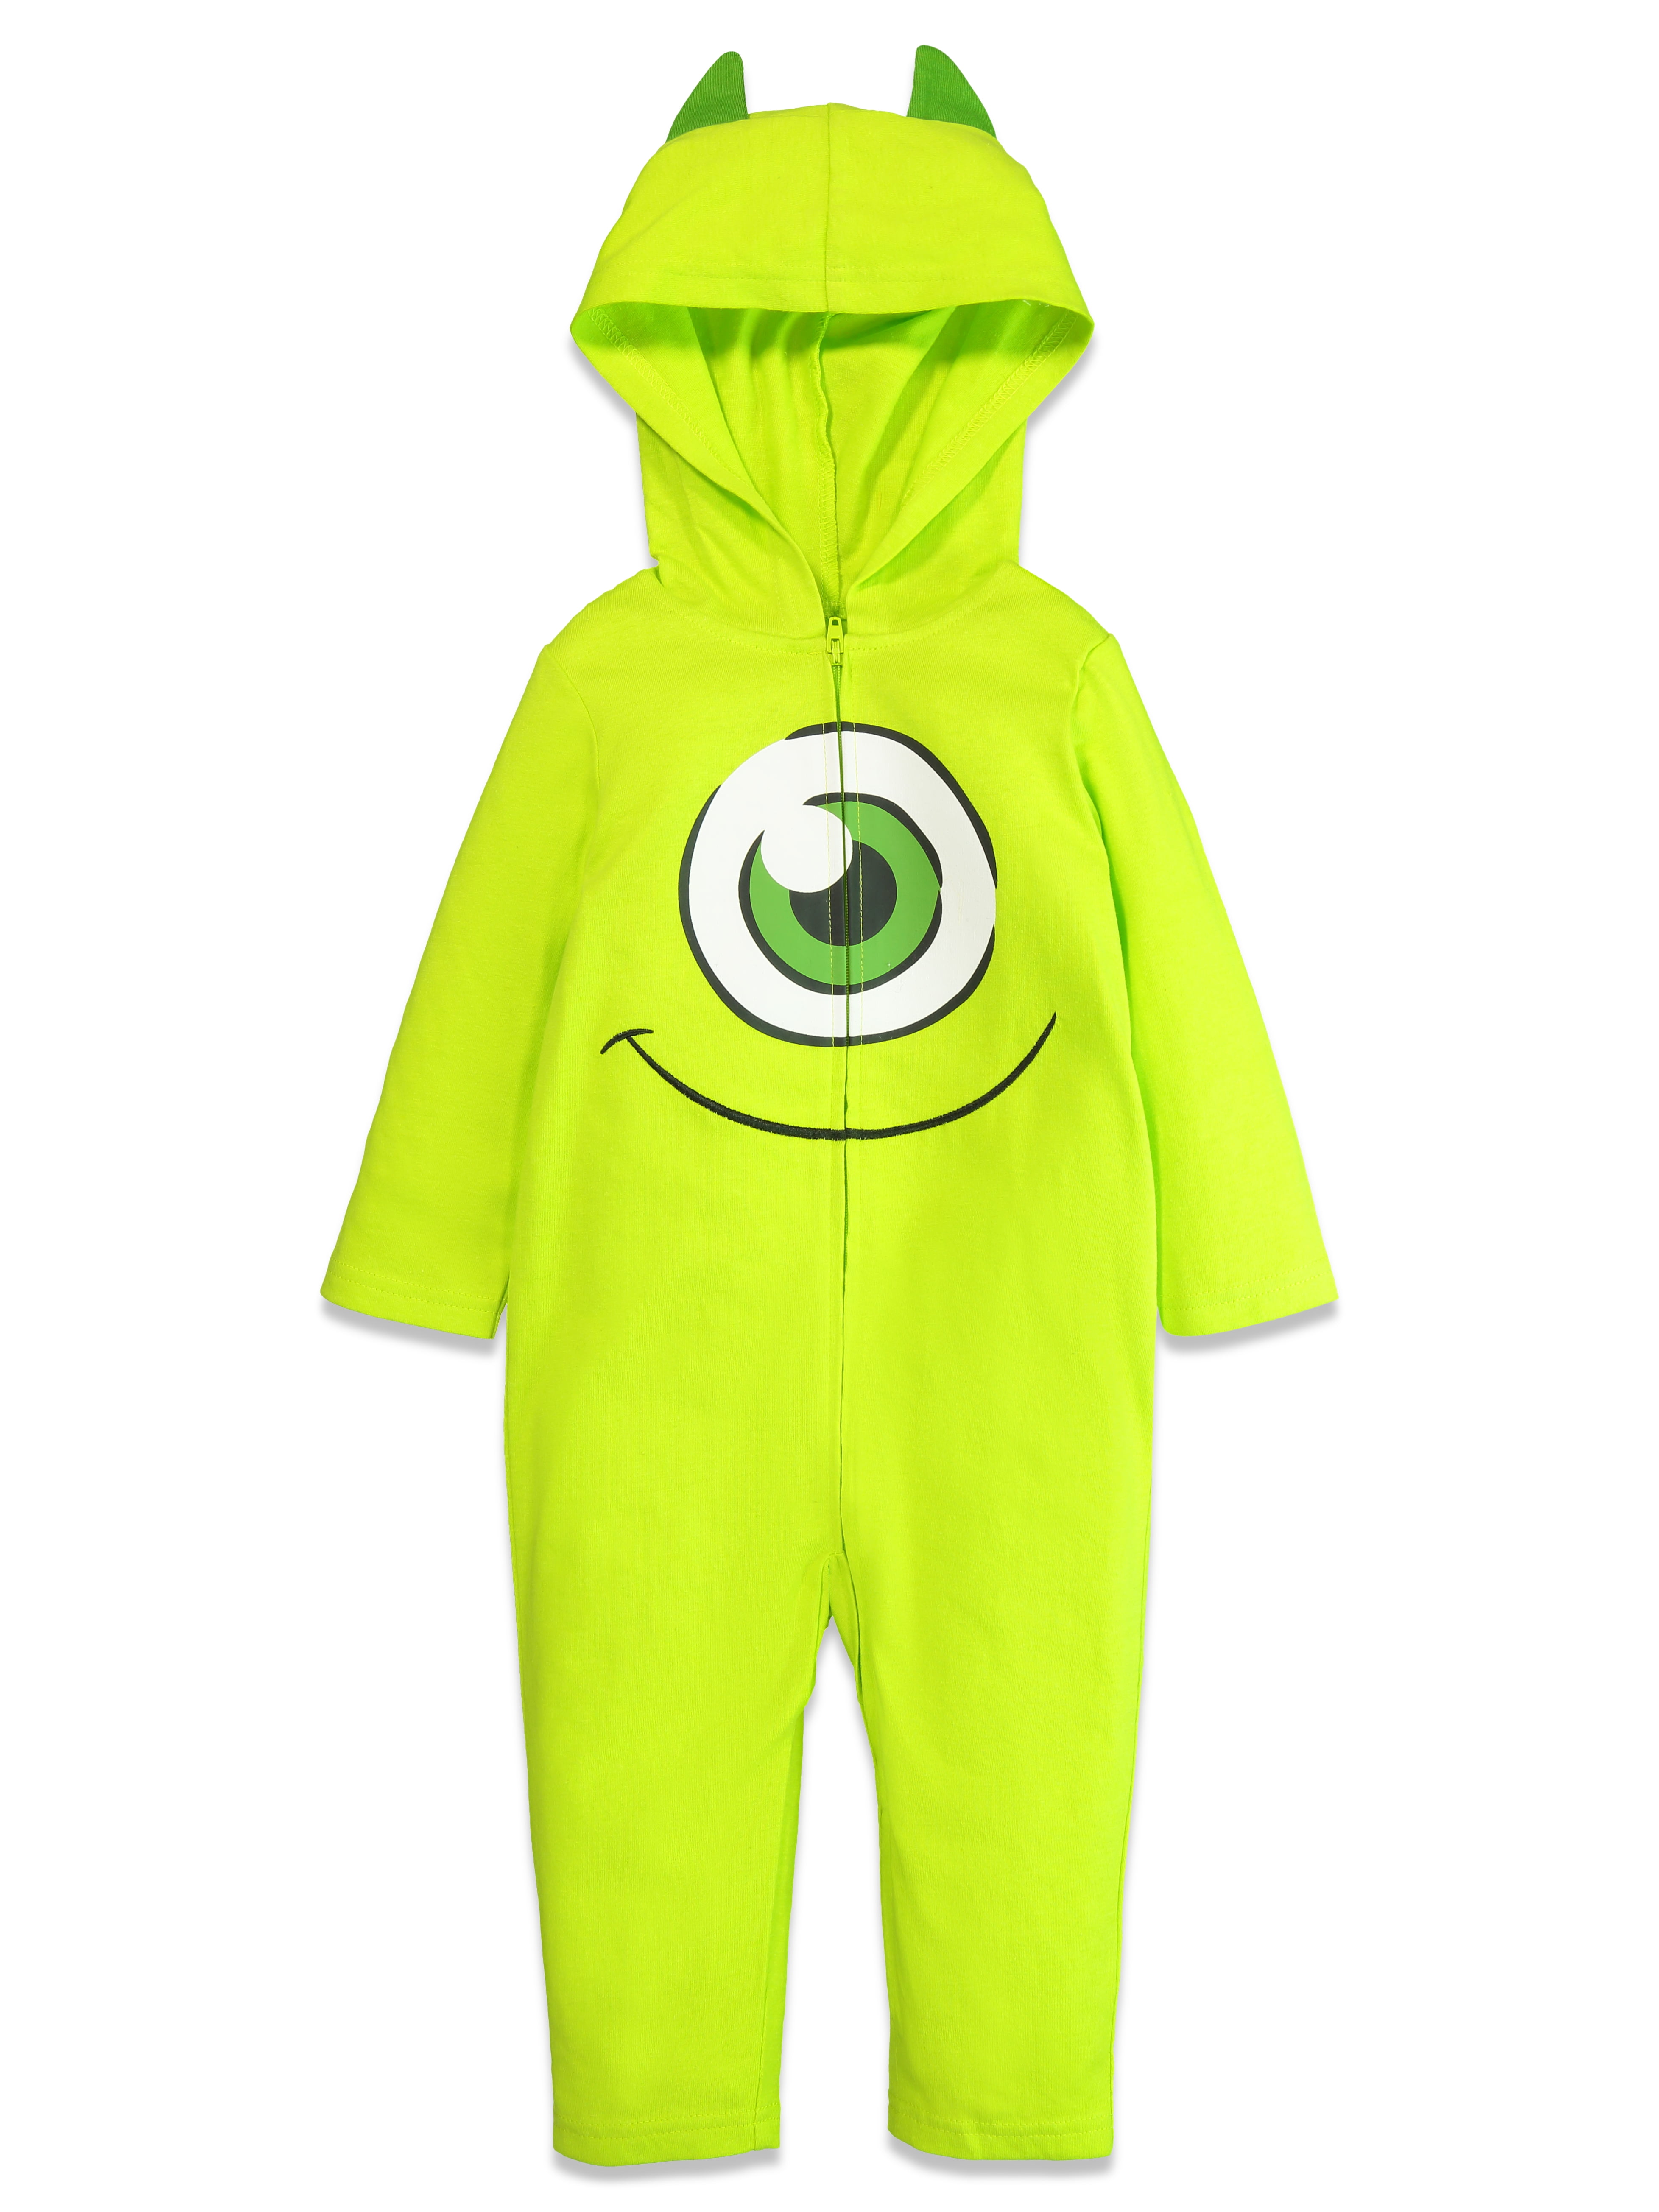 Disney - Disney Pixar Monsters Inc Mike Wazowski Toddler Boys Costume Zip-Up Coverall 2T